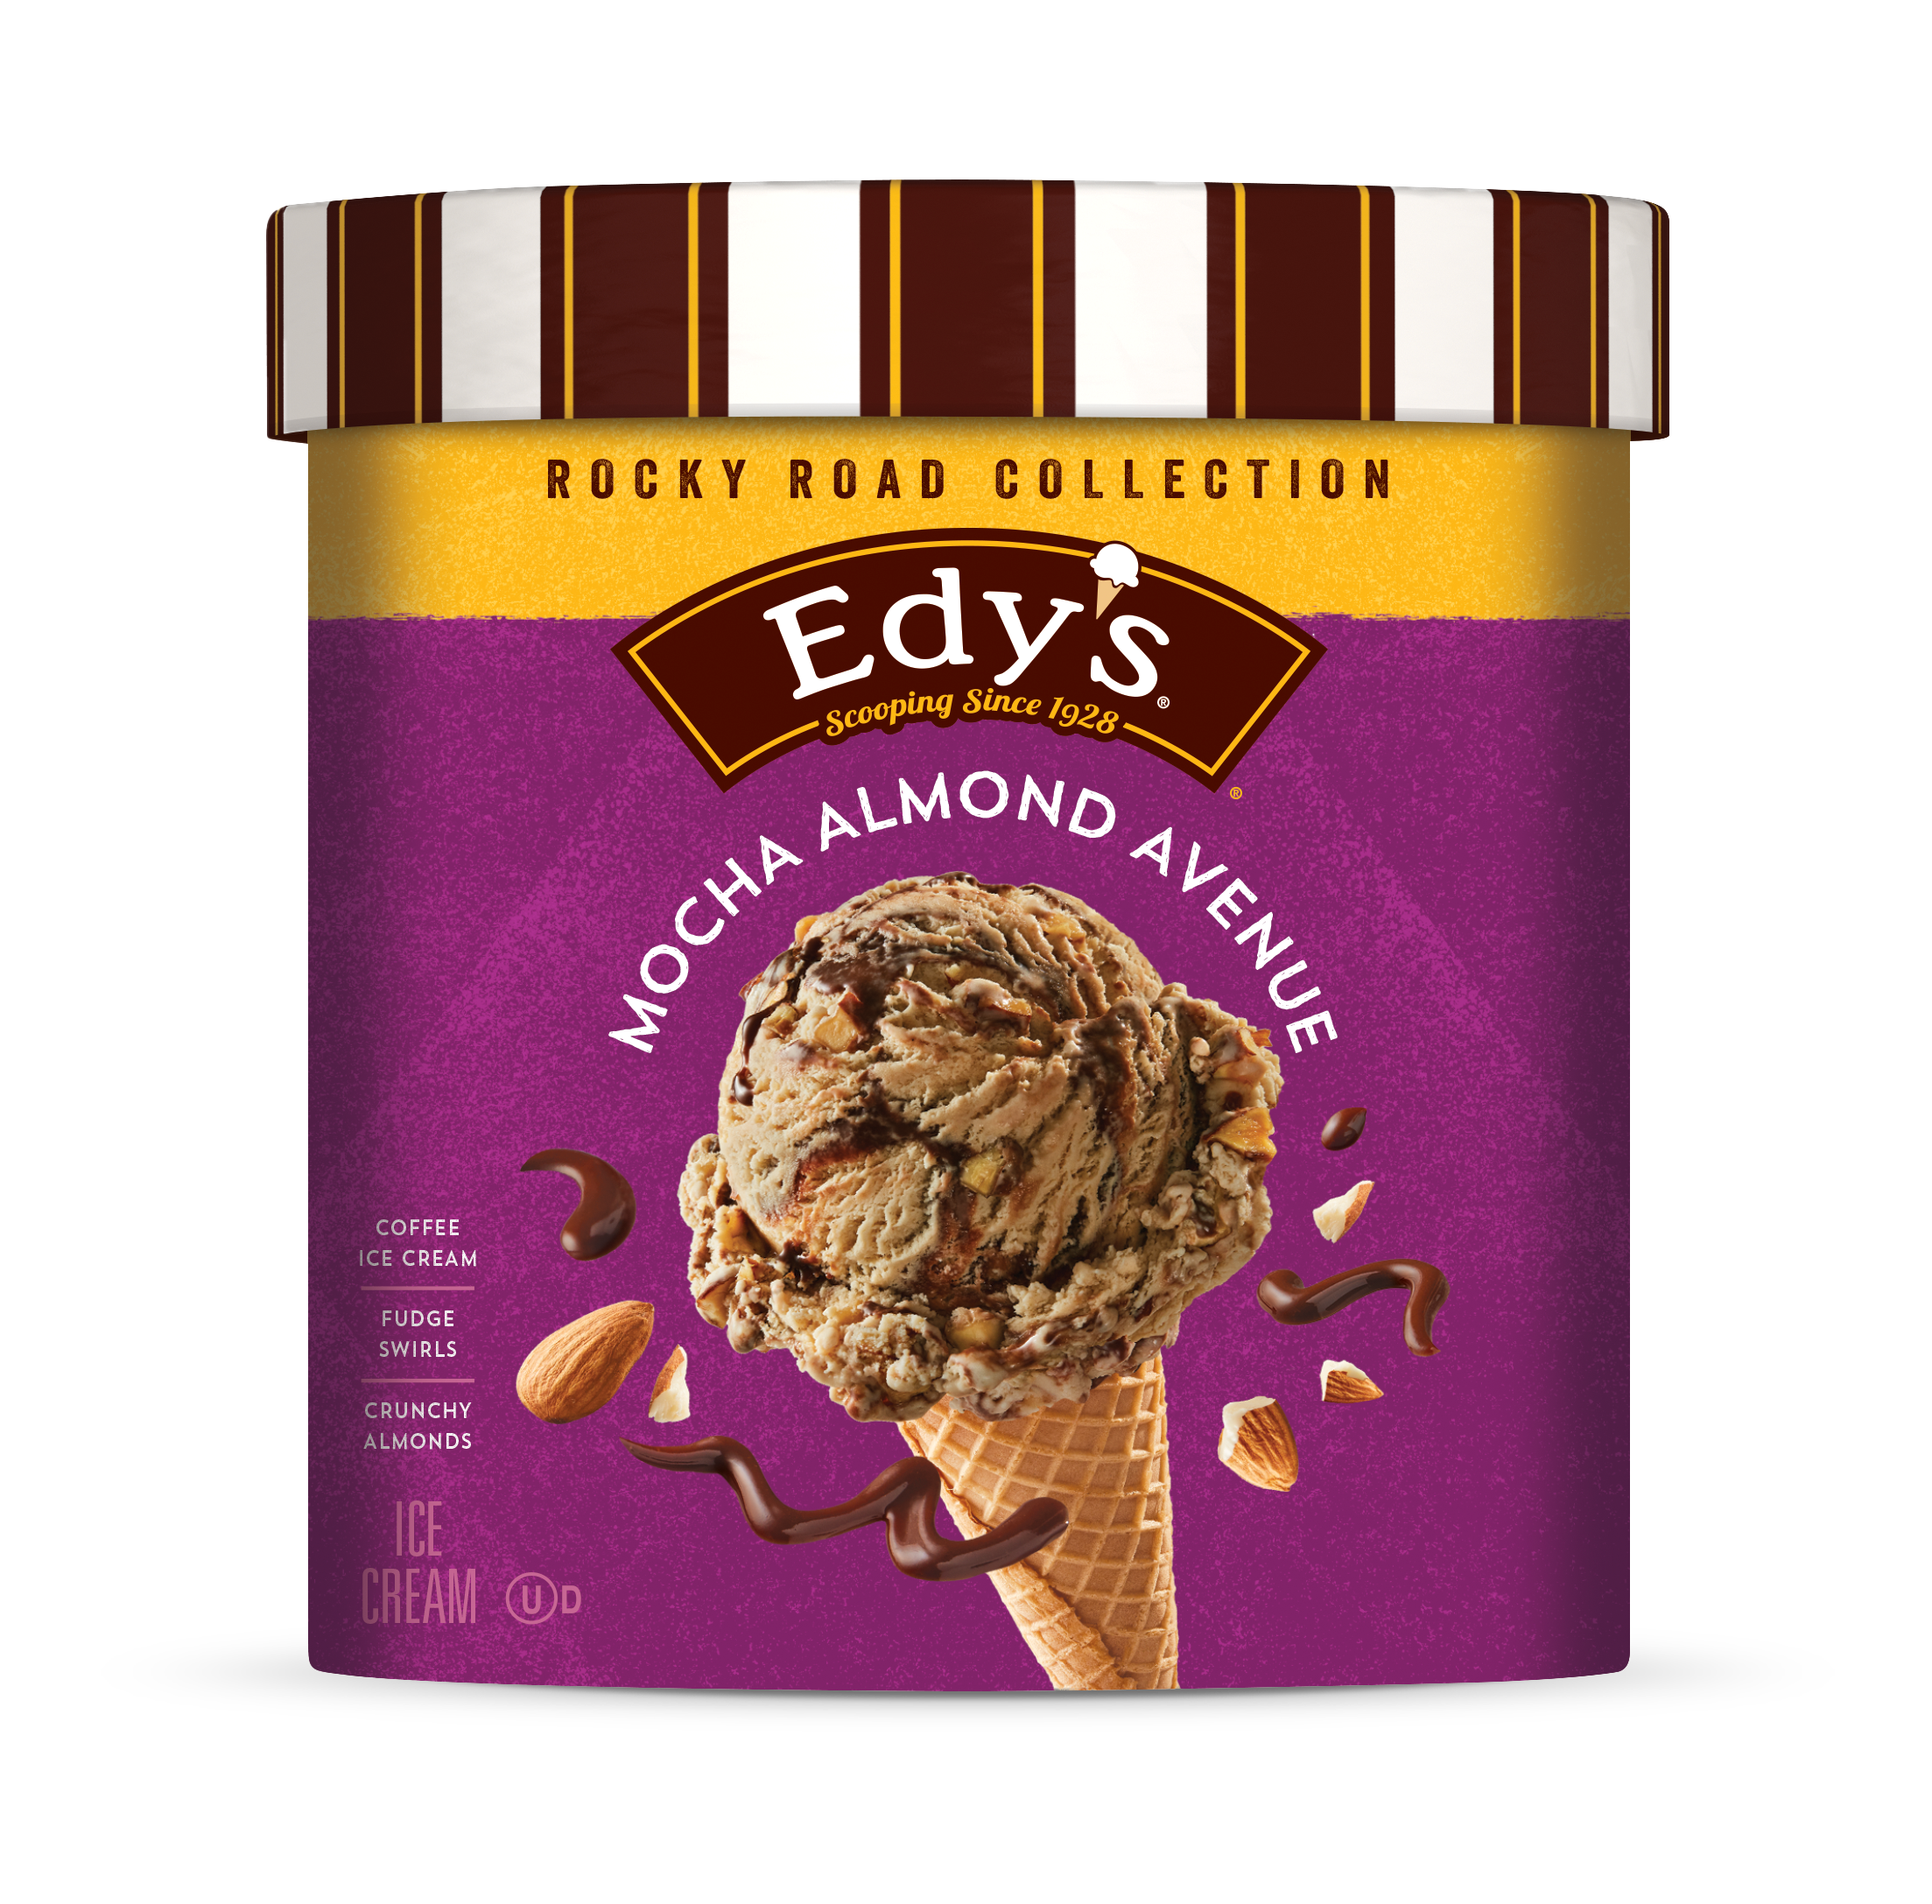 Carton of Edy's mocha almond avenue ice cream